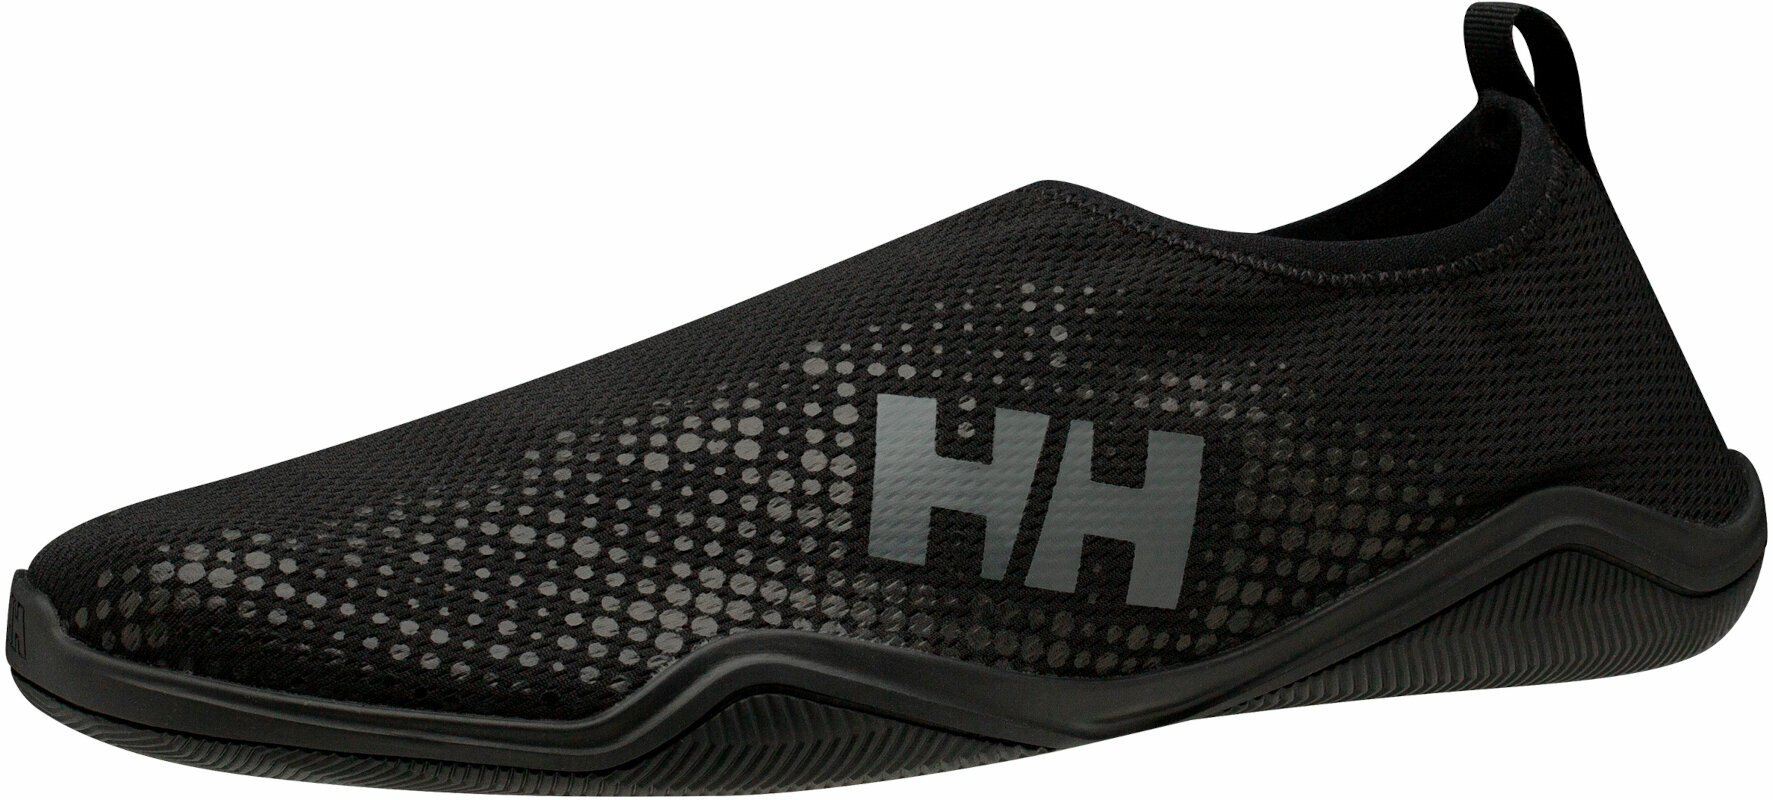 Herrenschuhe Helly Hansen Men's Crest Watermoc Black/Charcoal 42